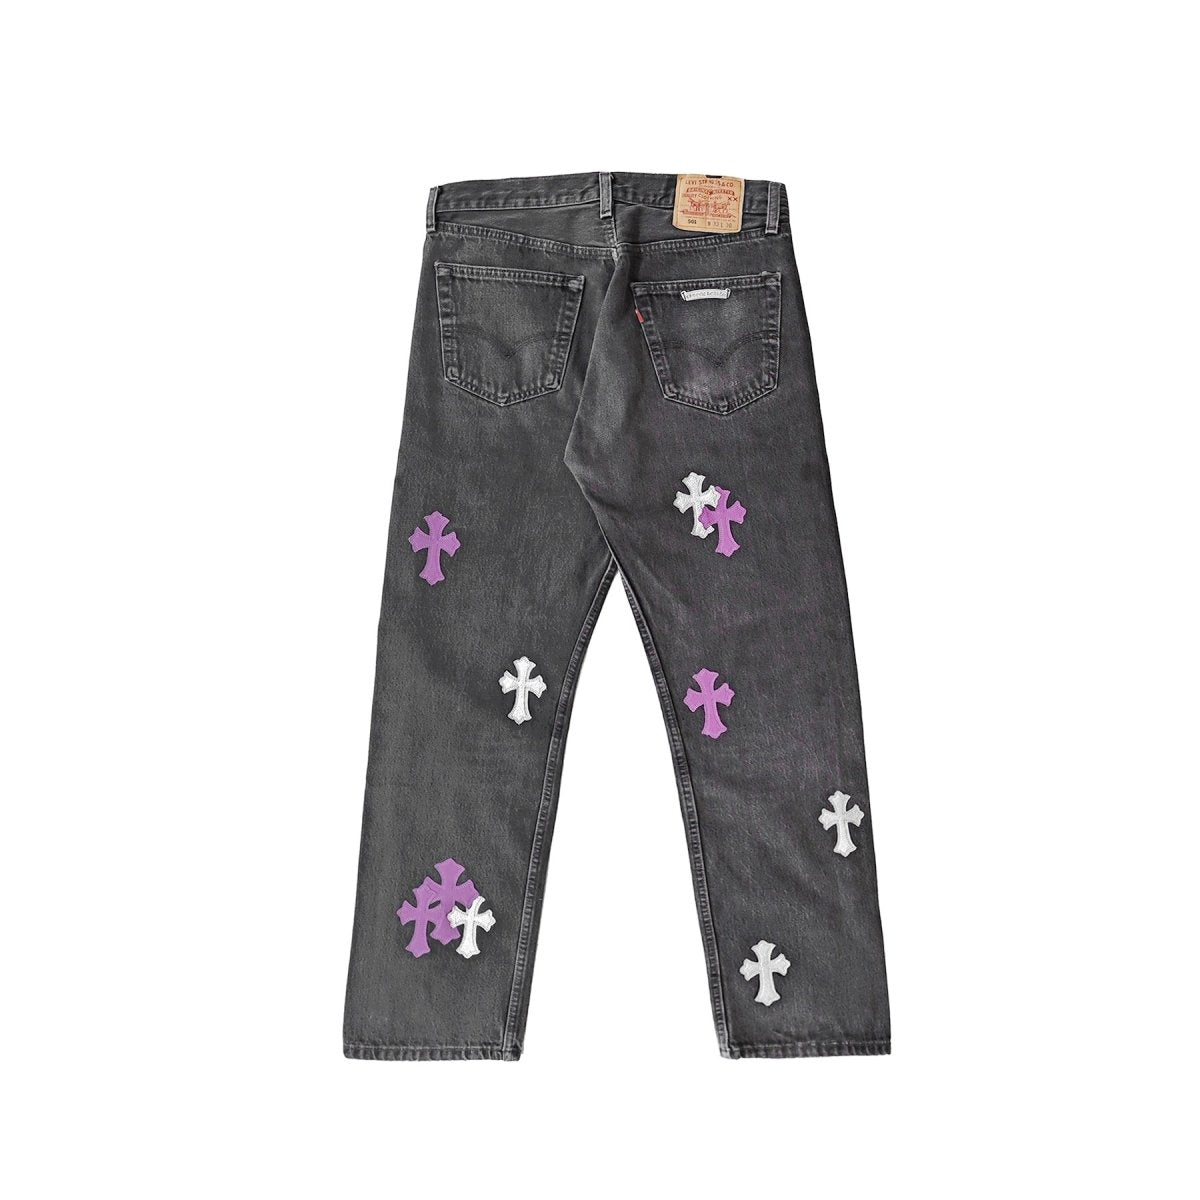 Chrome Hearts 1of1 Silver Sequin Purple Leather Cross Jeans - SHENGLI ROAD MARKET